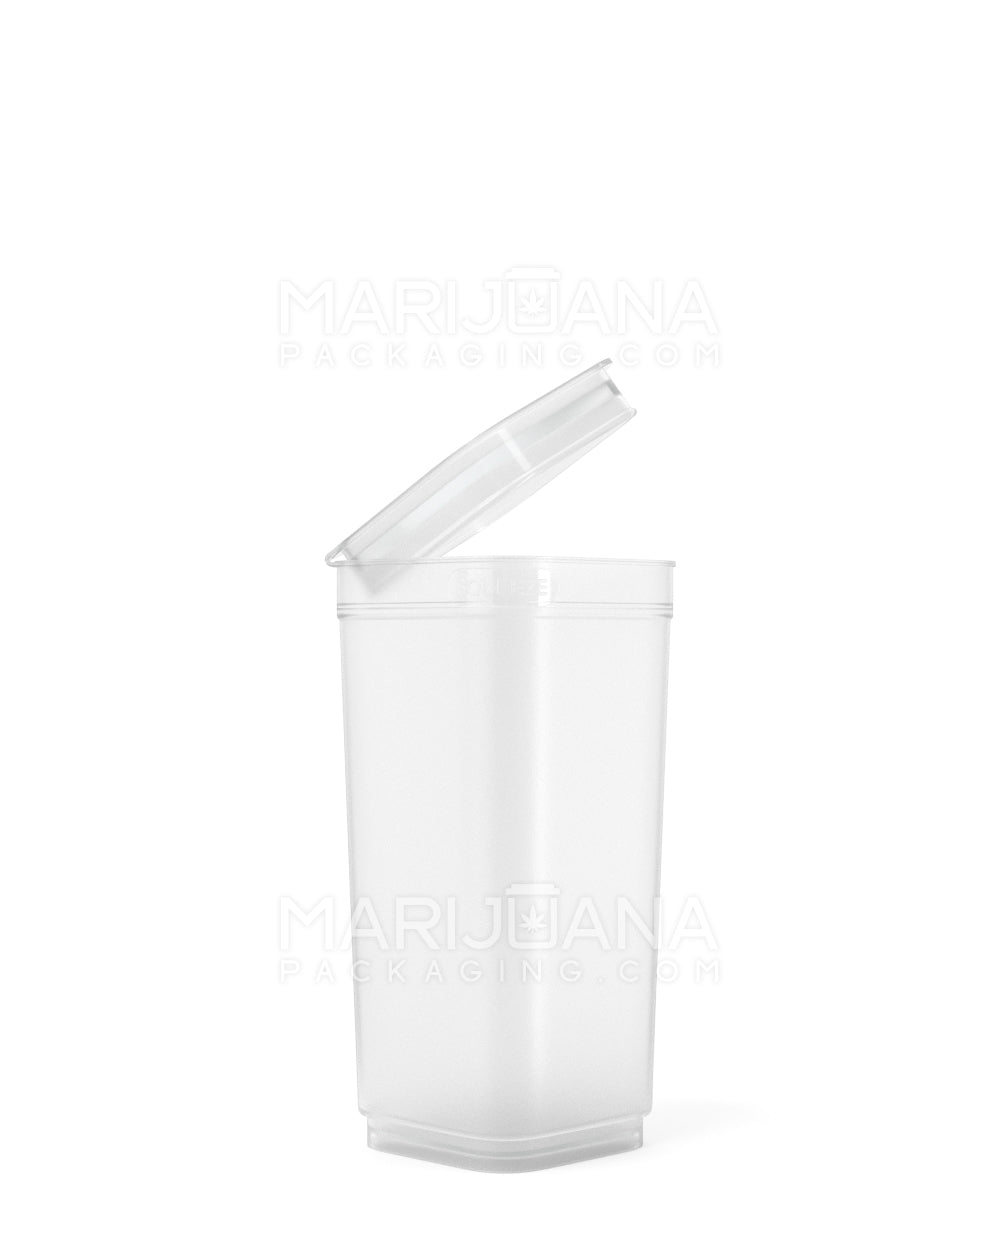 POLLEN GEAR | Child Resistant 100% Recyclable Transparent Clear Pop Box Pop Top Bottles | 30dr - 7g - 373 Count